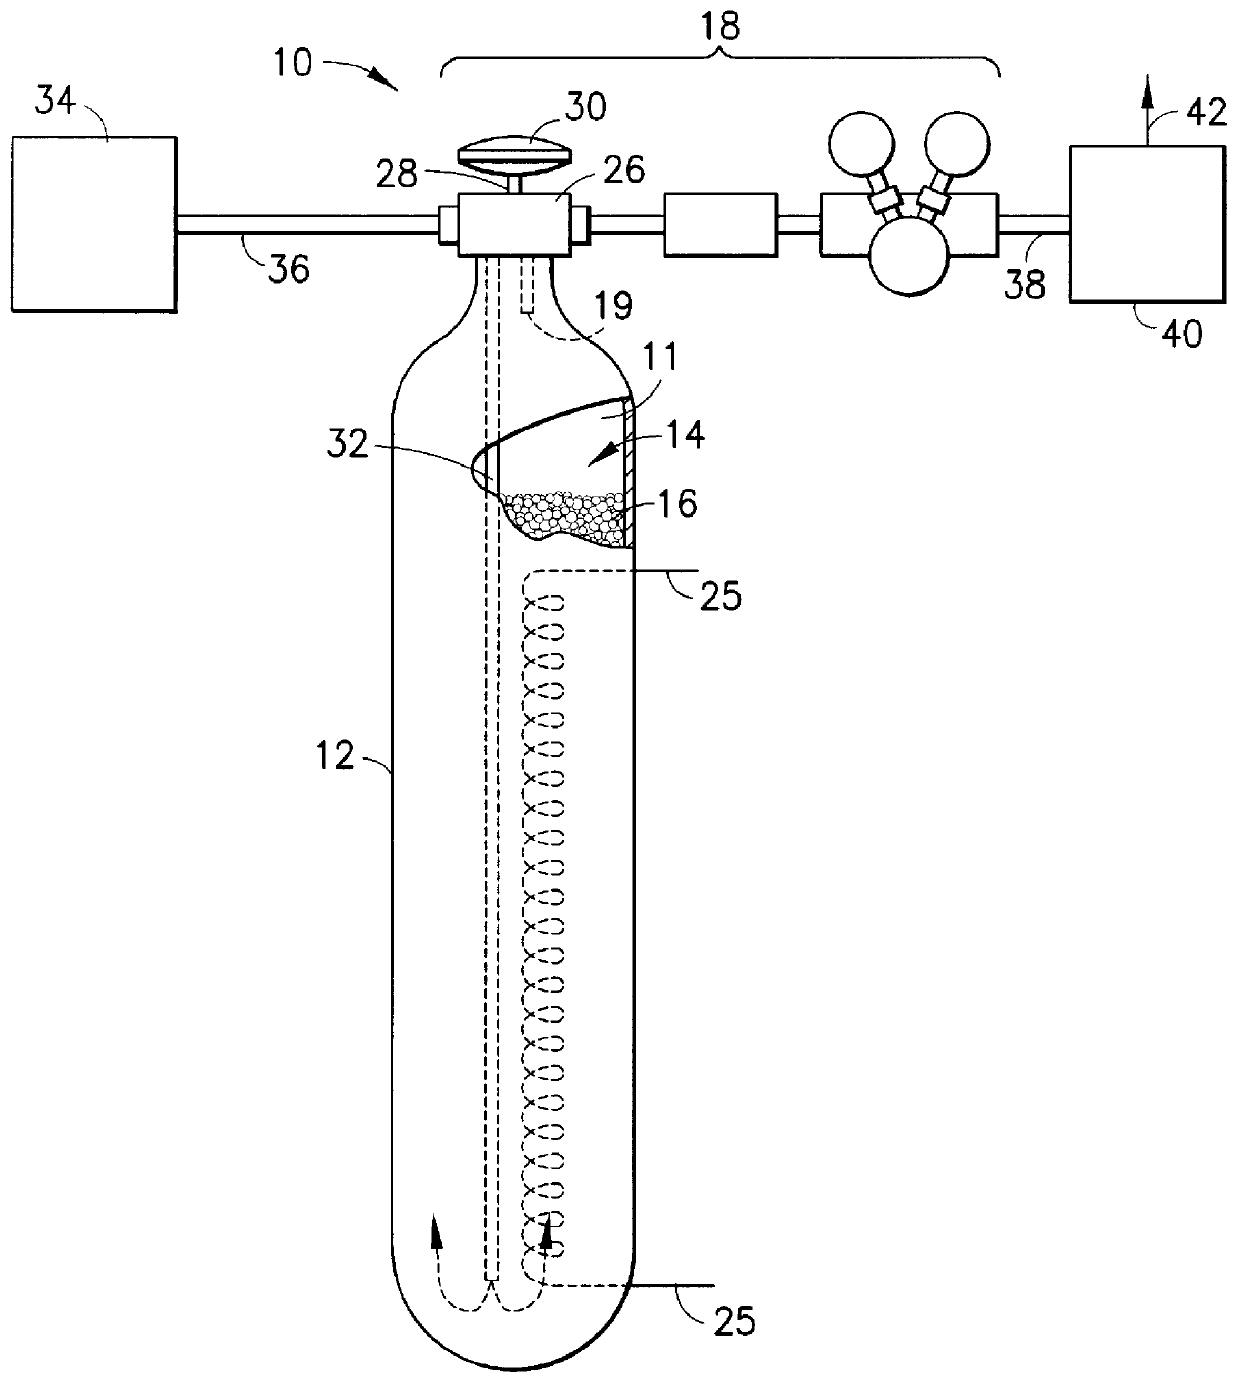 Sorbent-based fluid storage and dispensing vessel with replaceable sorbent cartridge members